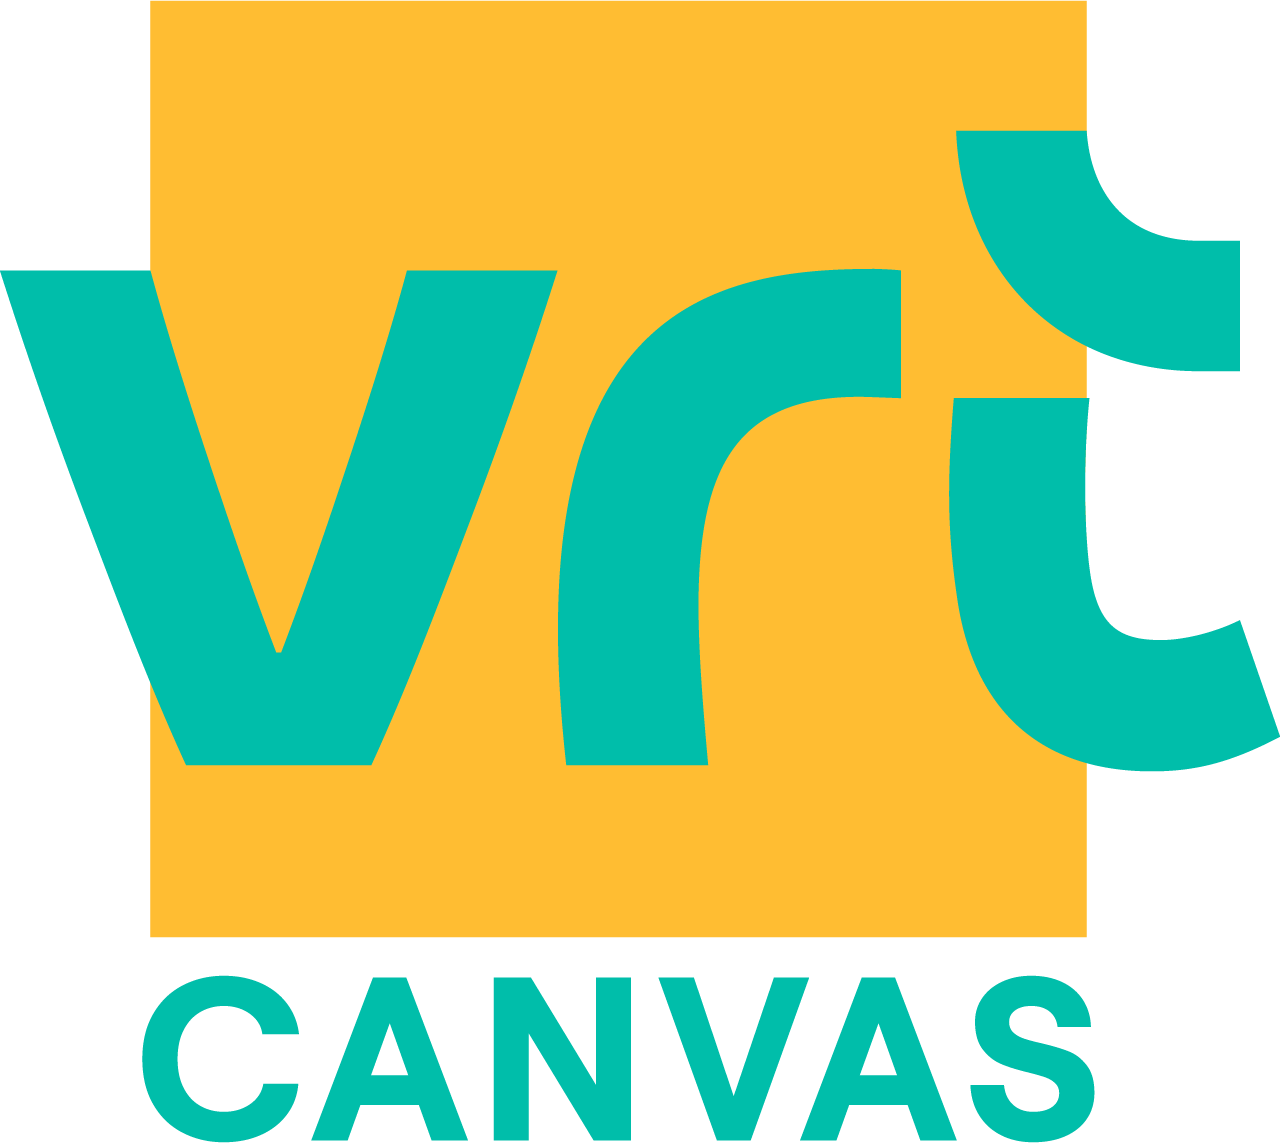 VRT Canvas